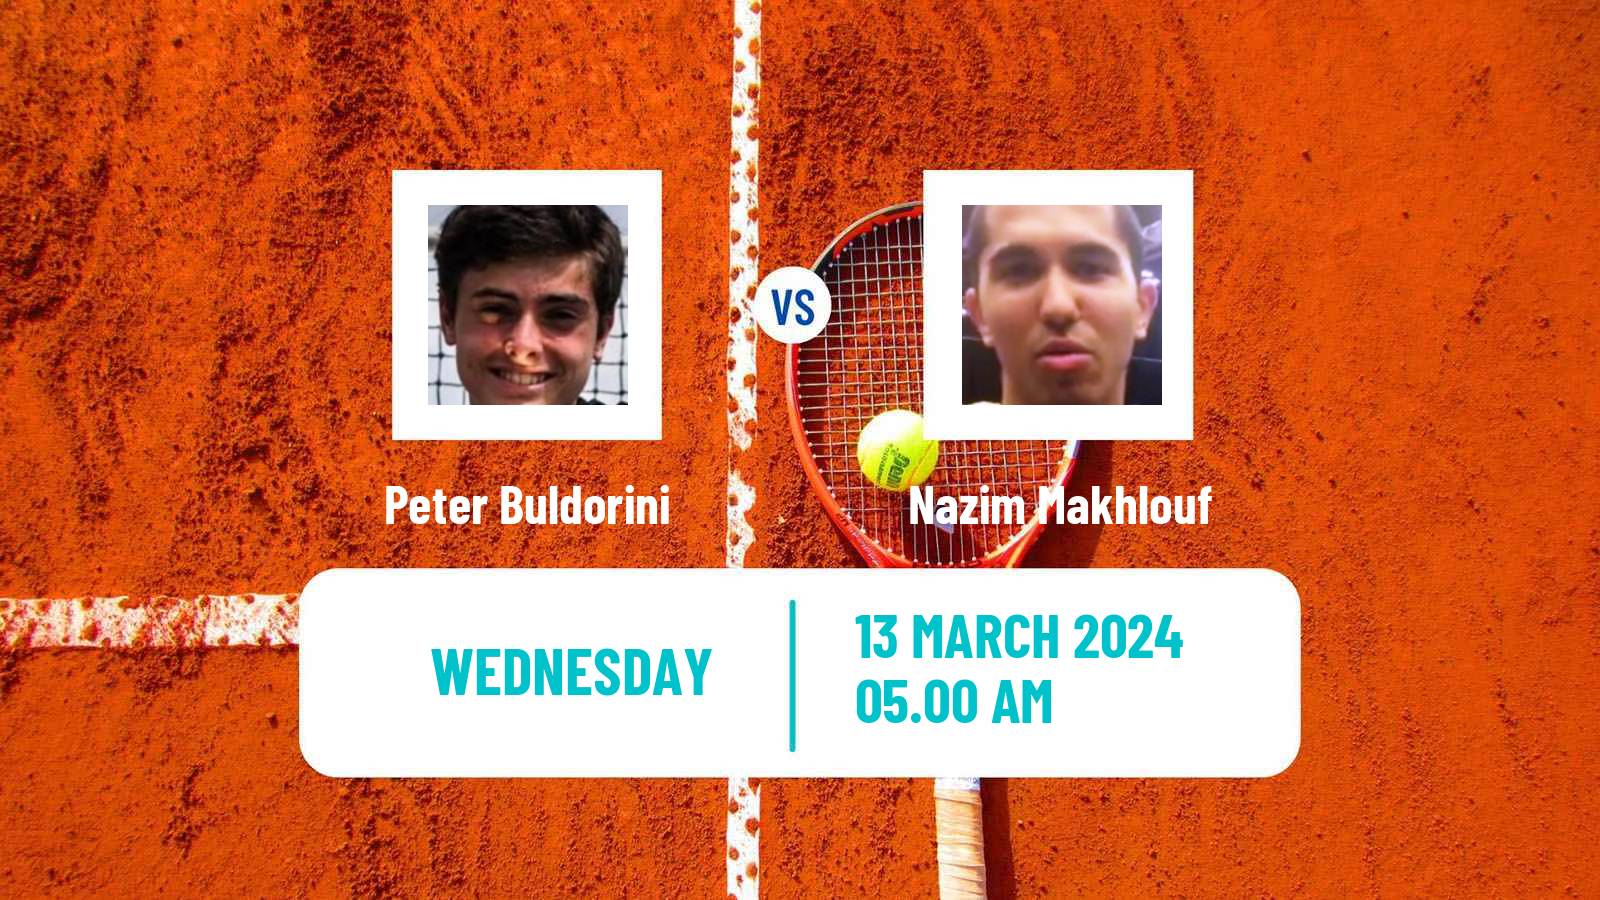 Tennis ITF M15 Monastir 11 Men Peter Buldorini - Nazim Makhlouf